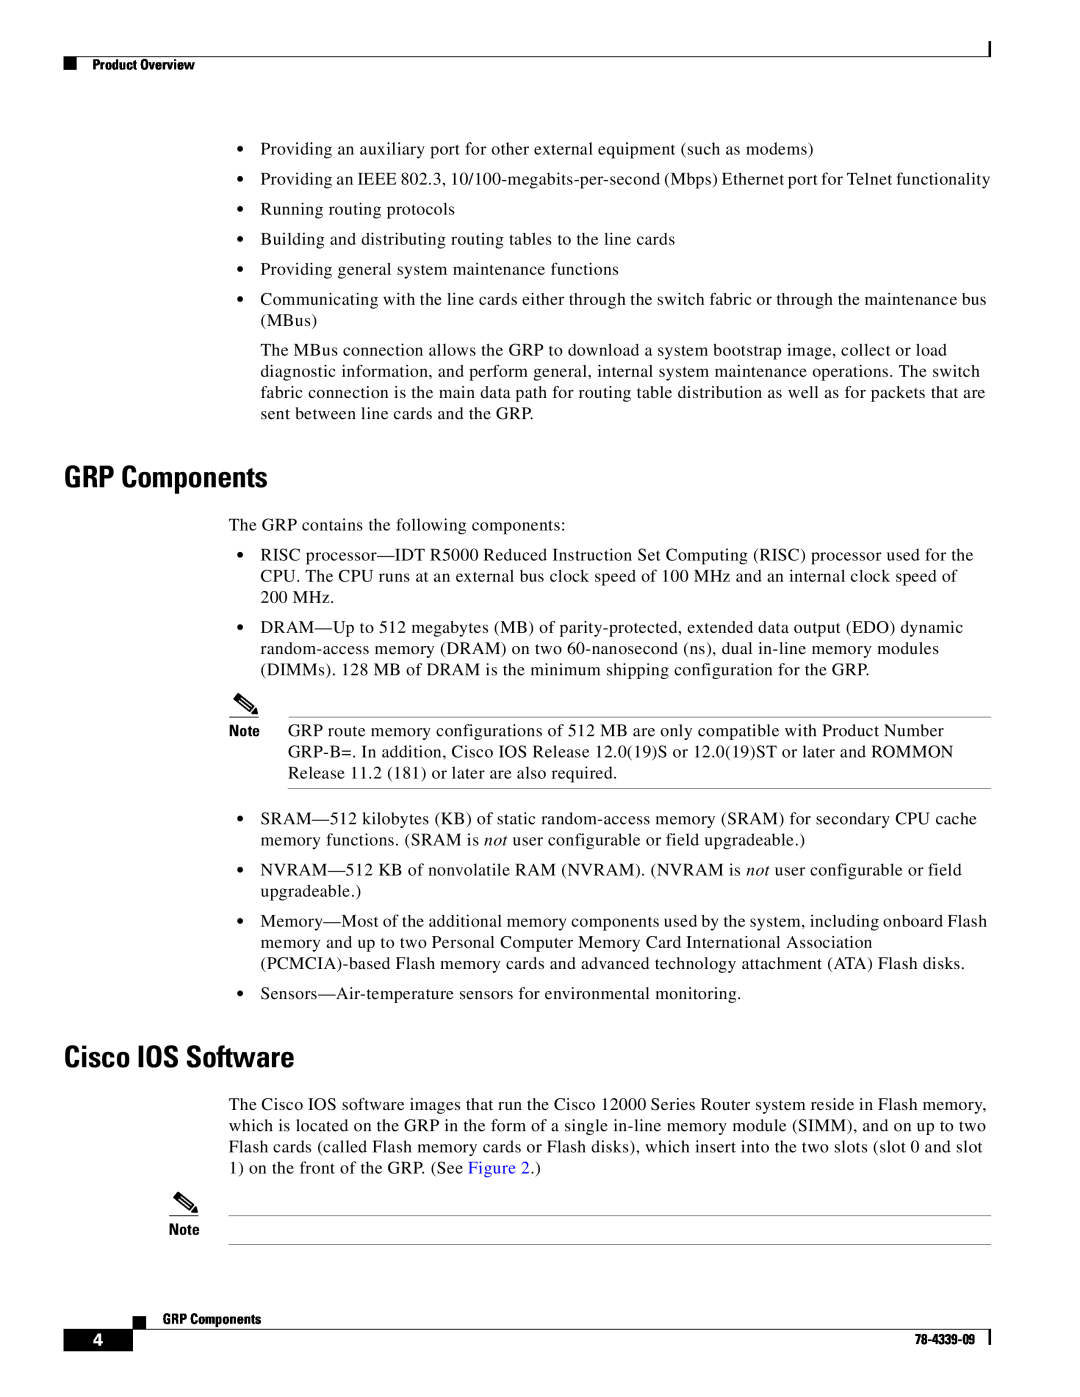 Cisco Systems GRP-B manual GRP Components, Cisco IOS Software 